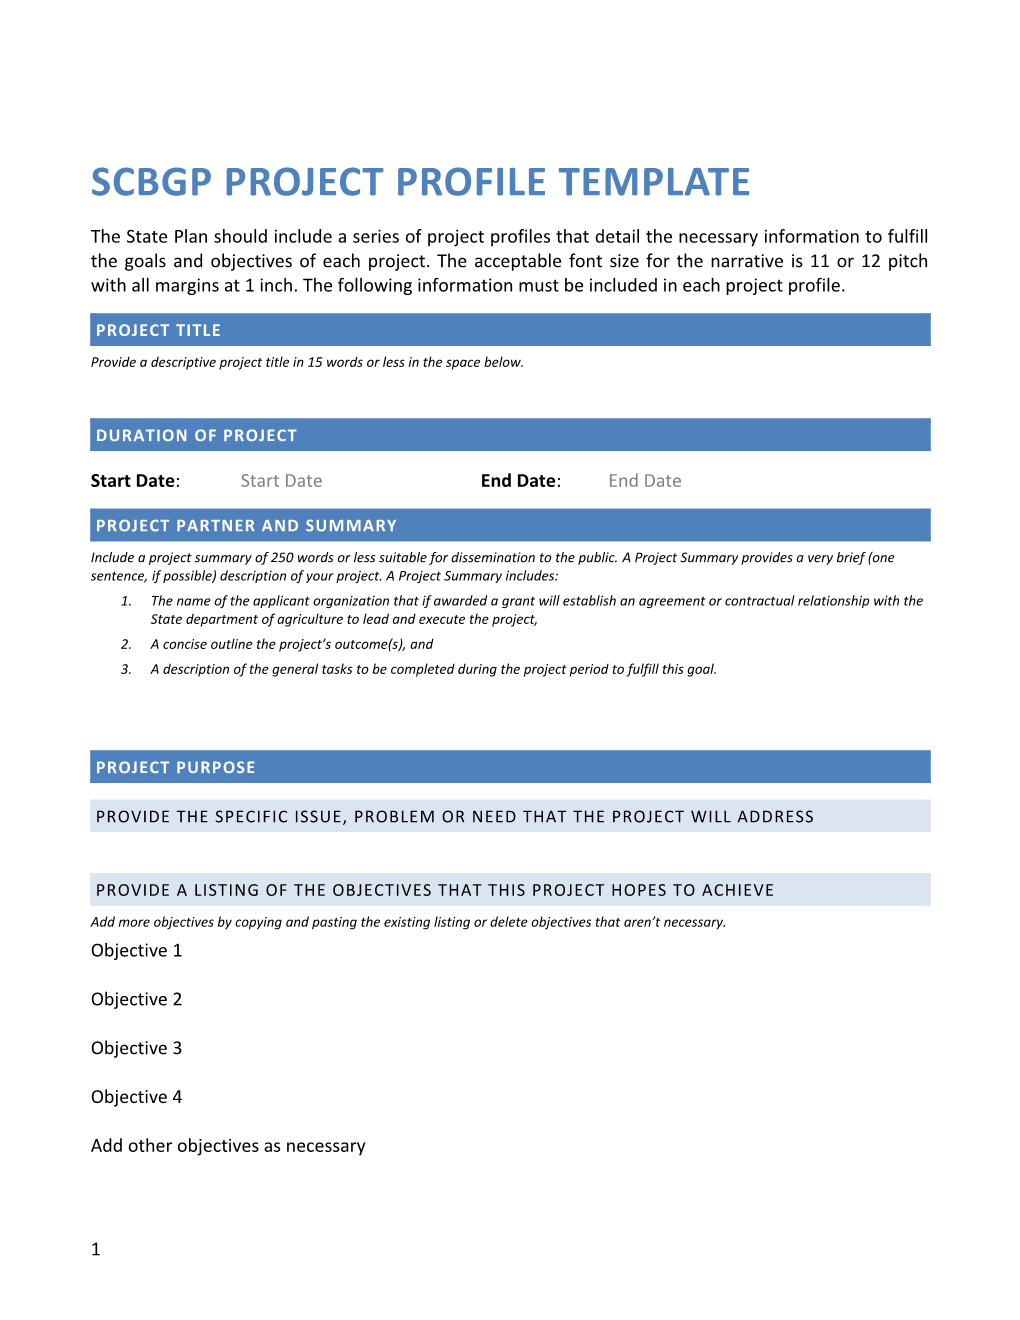 SCBGP Project Profile Template